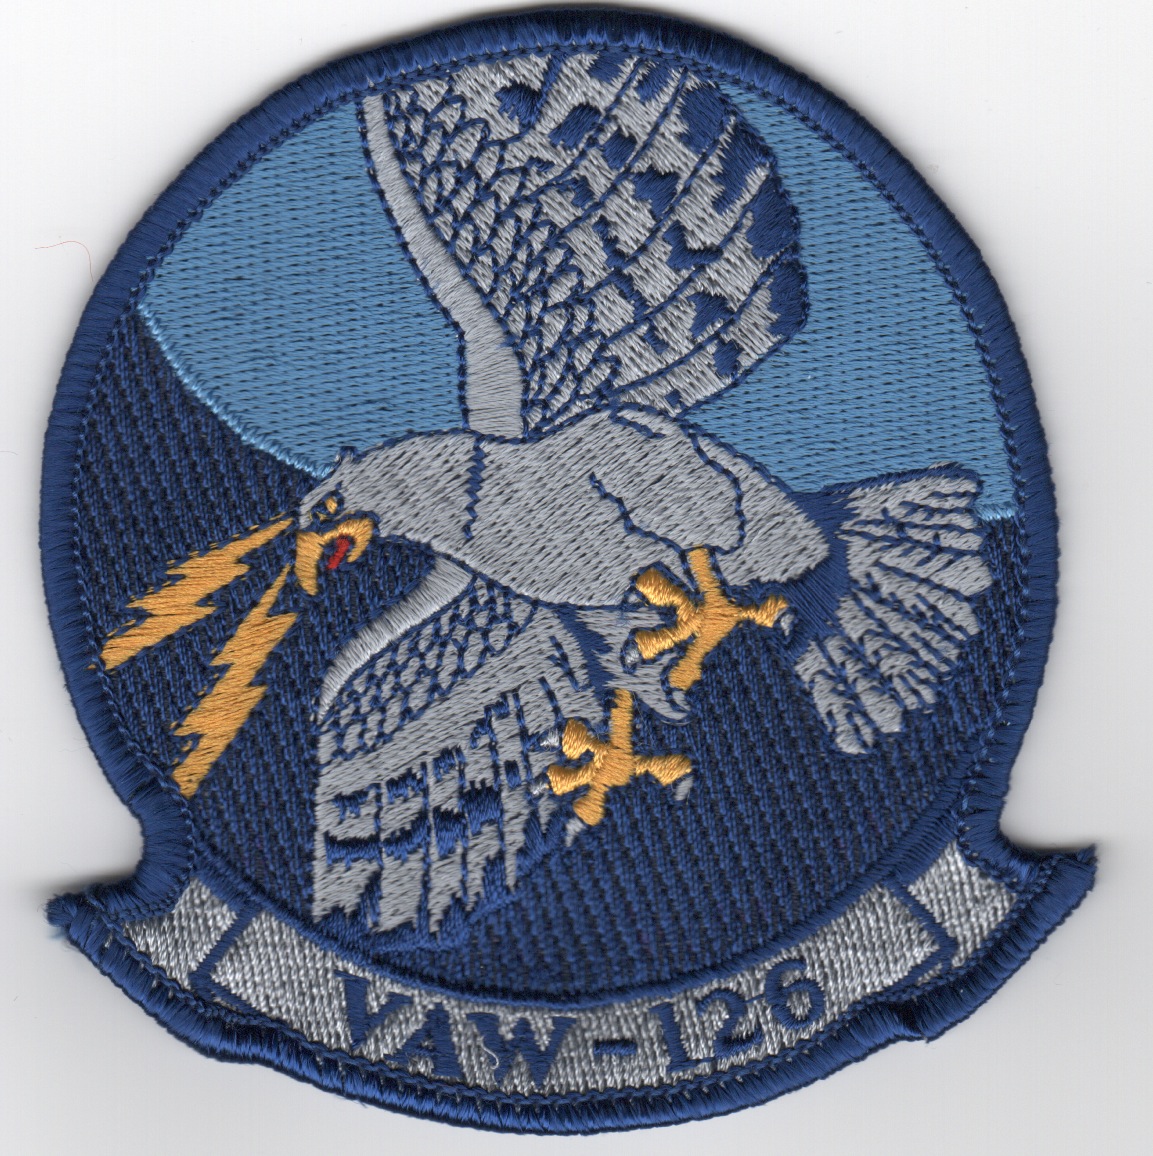 VAW-126 Squadron Patch (Blue Border)